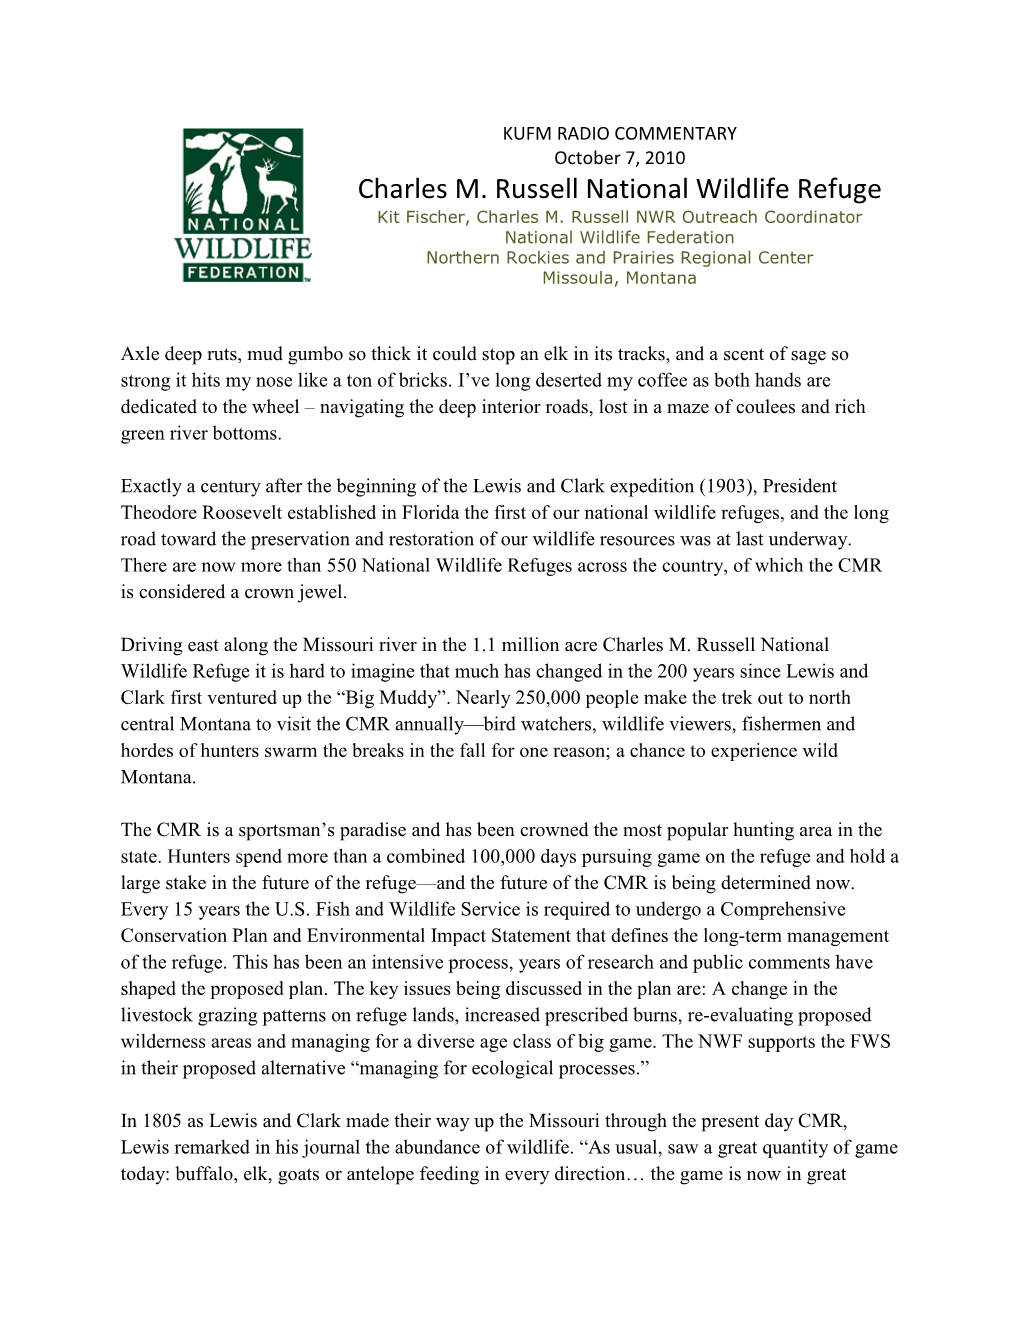 Charles M. Russell National Wildlife Refuge Kit Fischer, Charles M